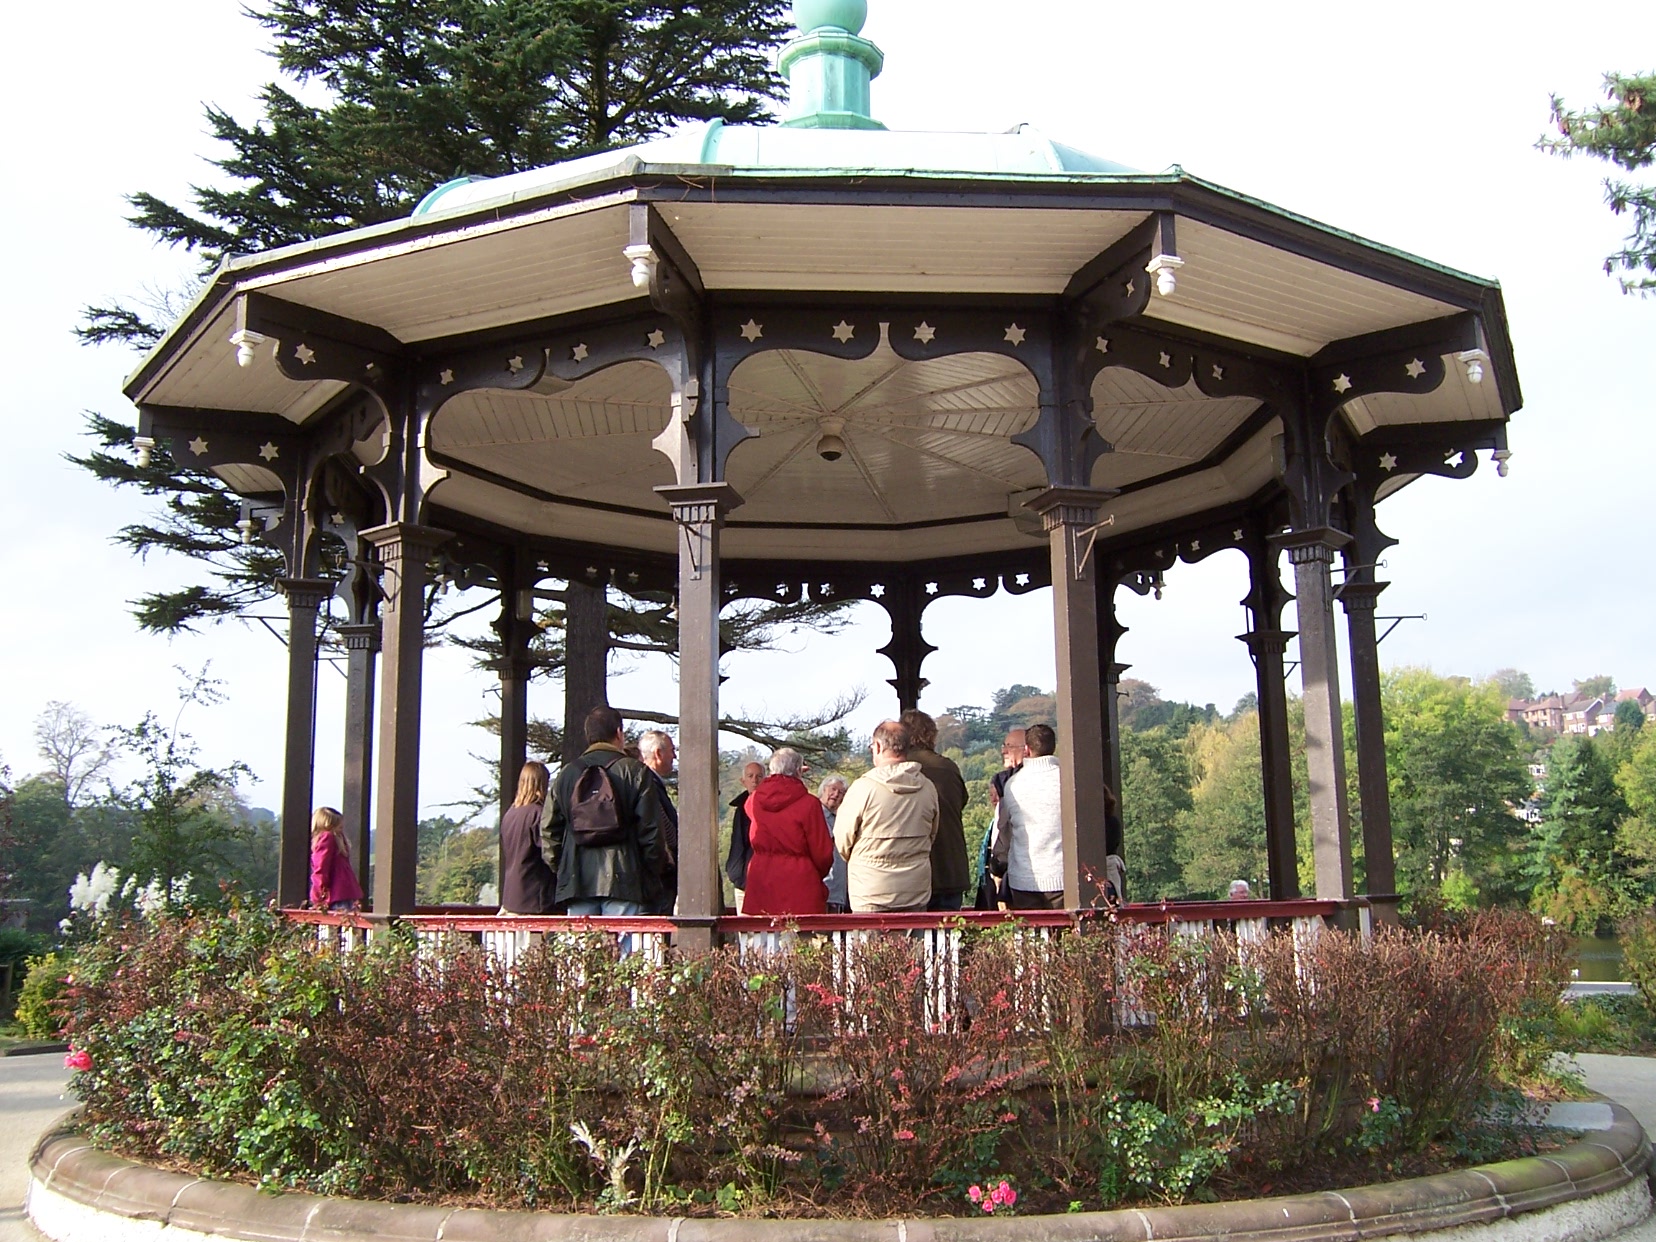 The bandstand in Belper River Gardens